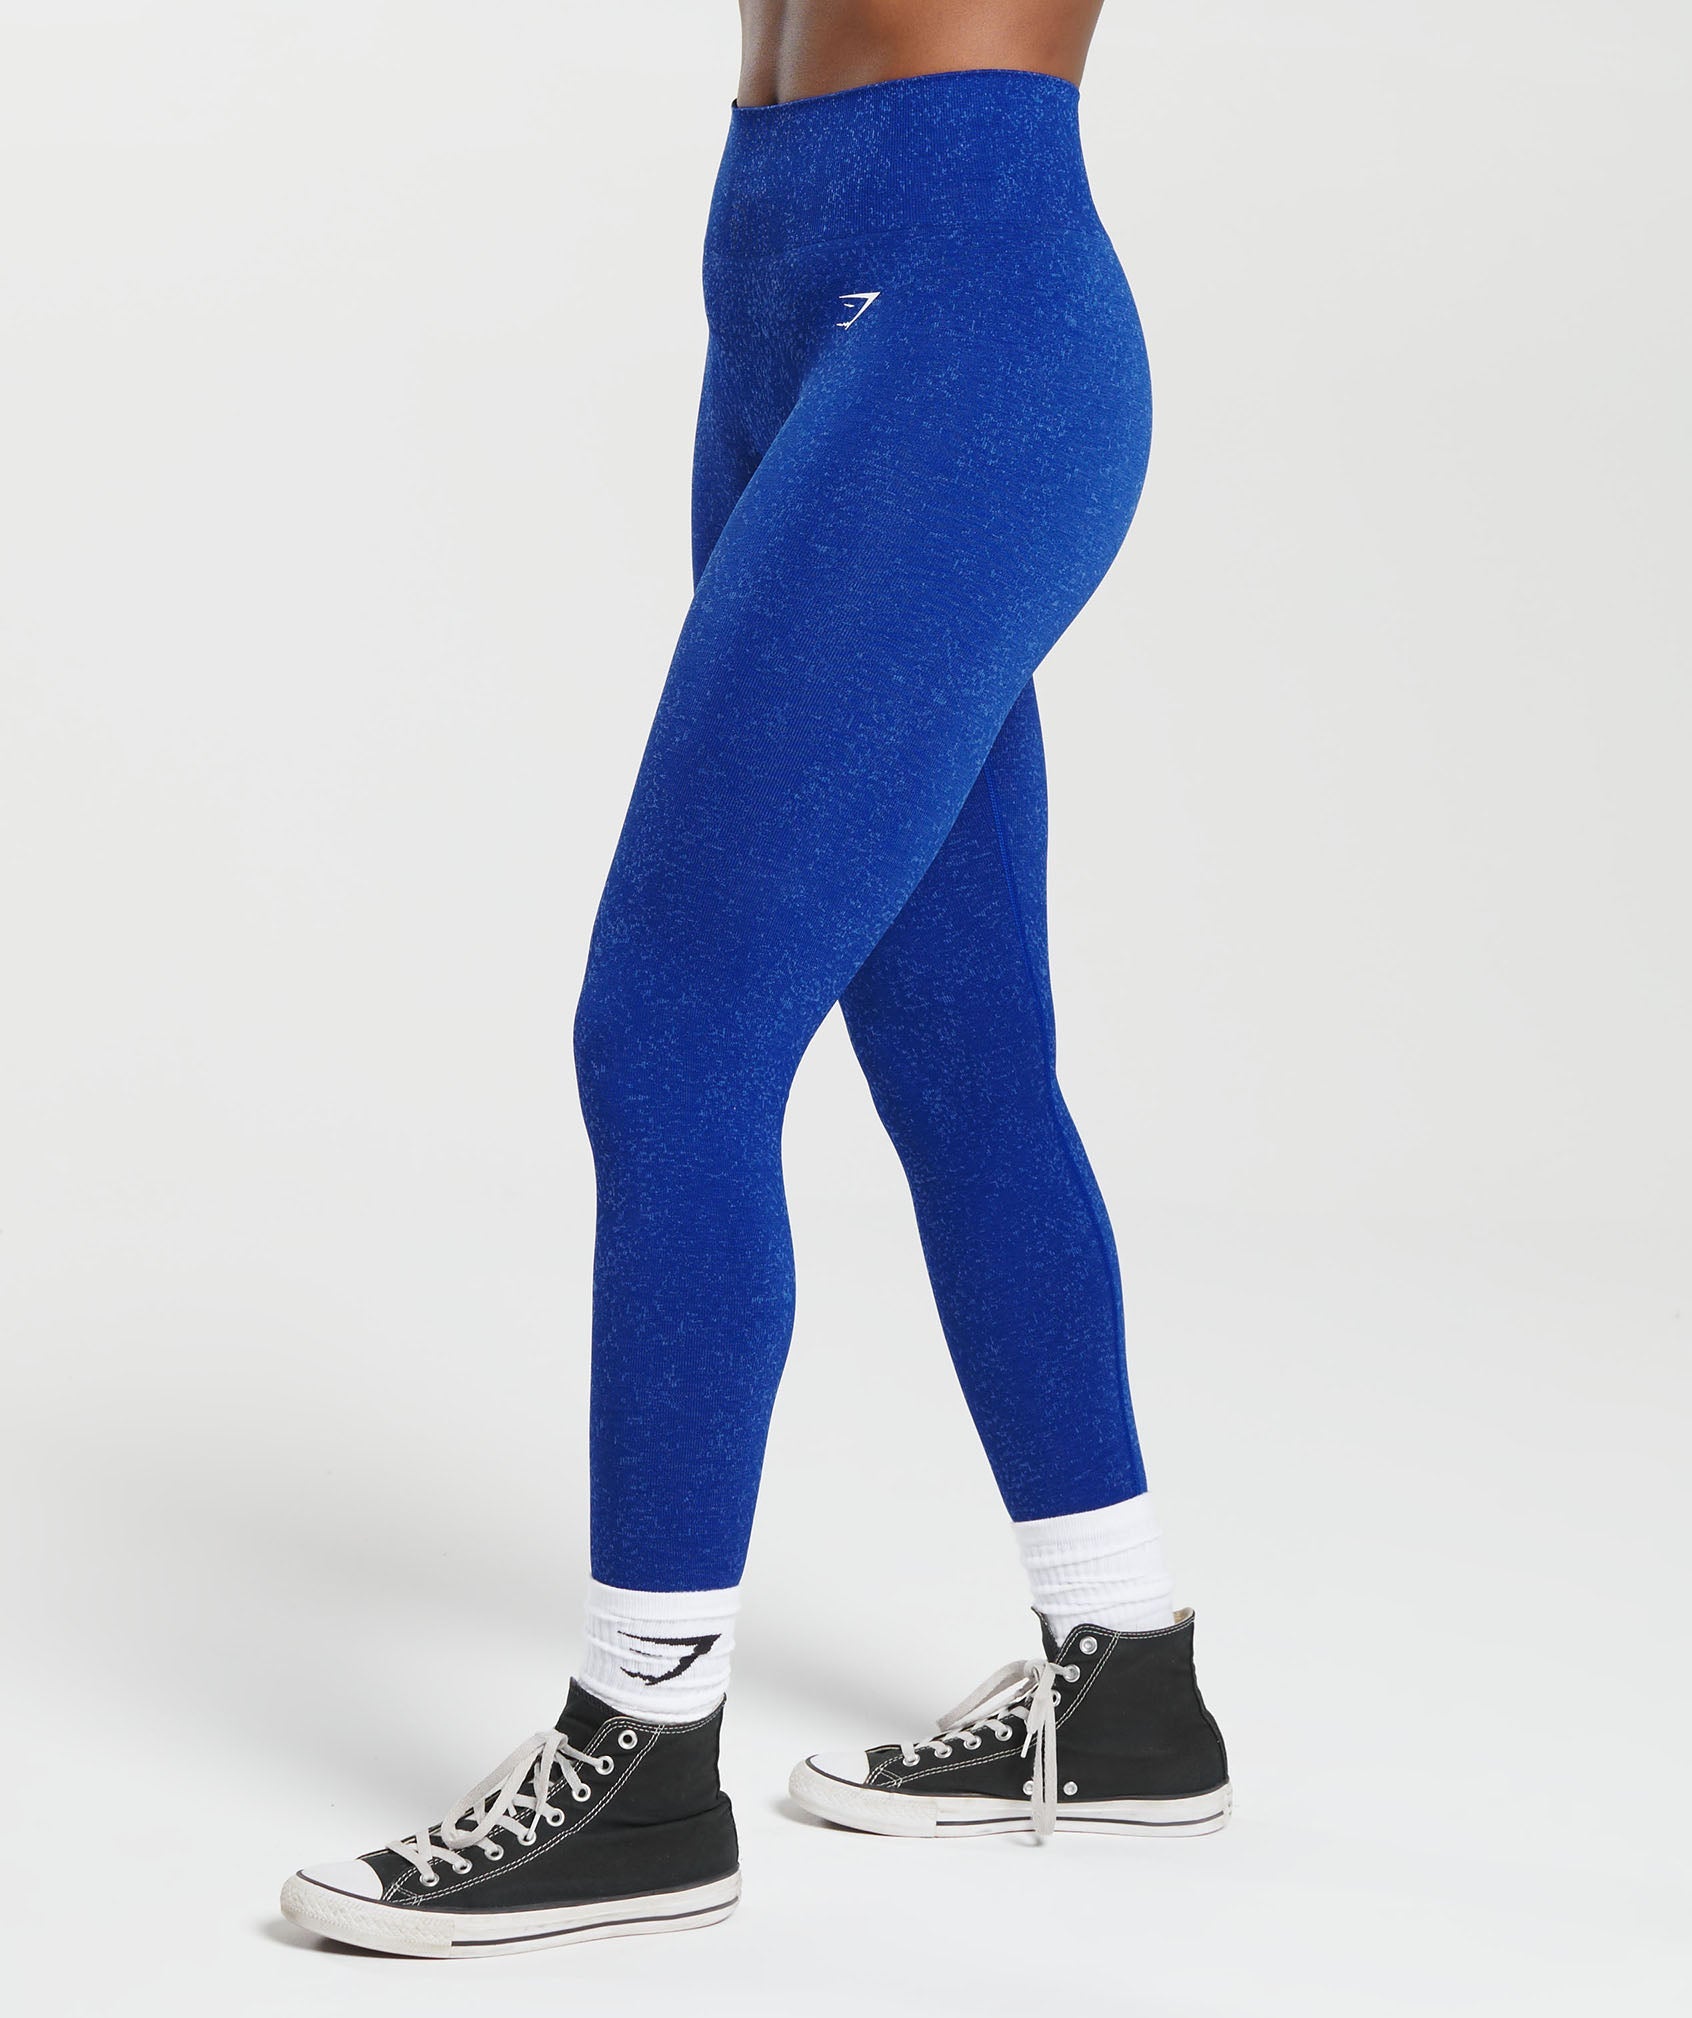 Rebelious Fit: Solid Seamless Leggings in Cobalt Blue